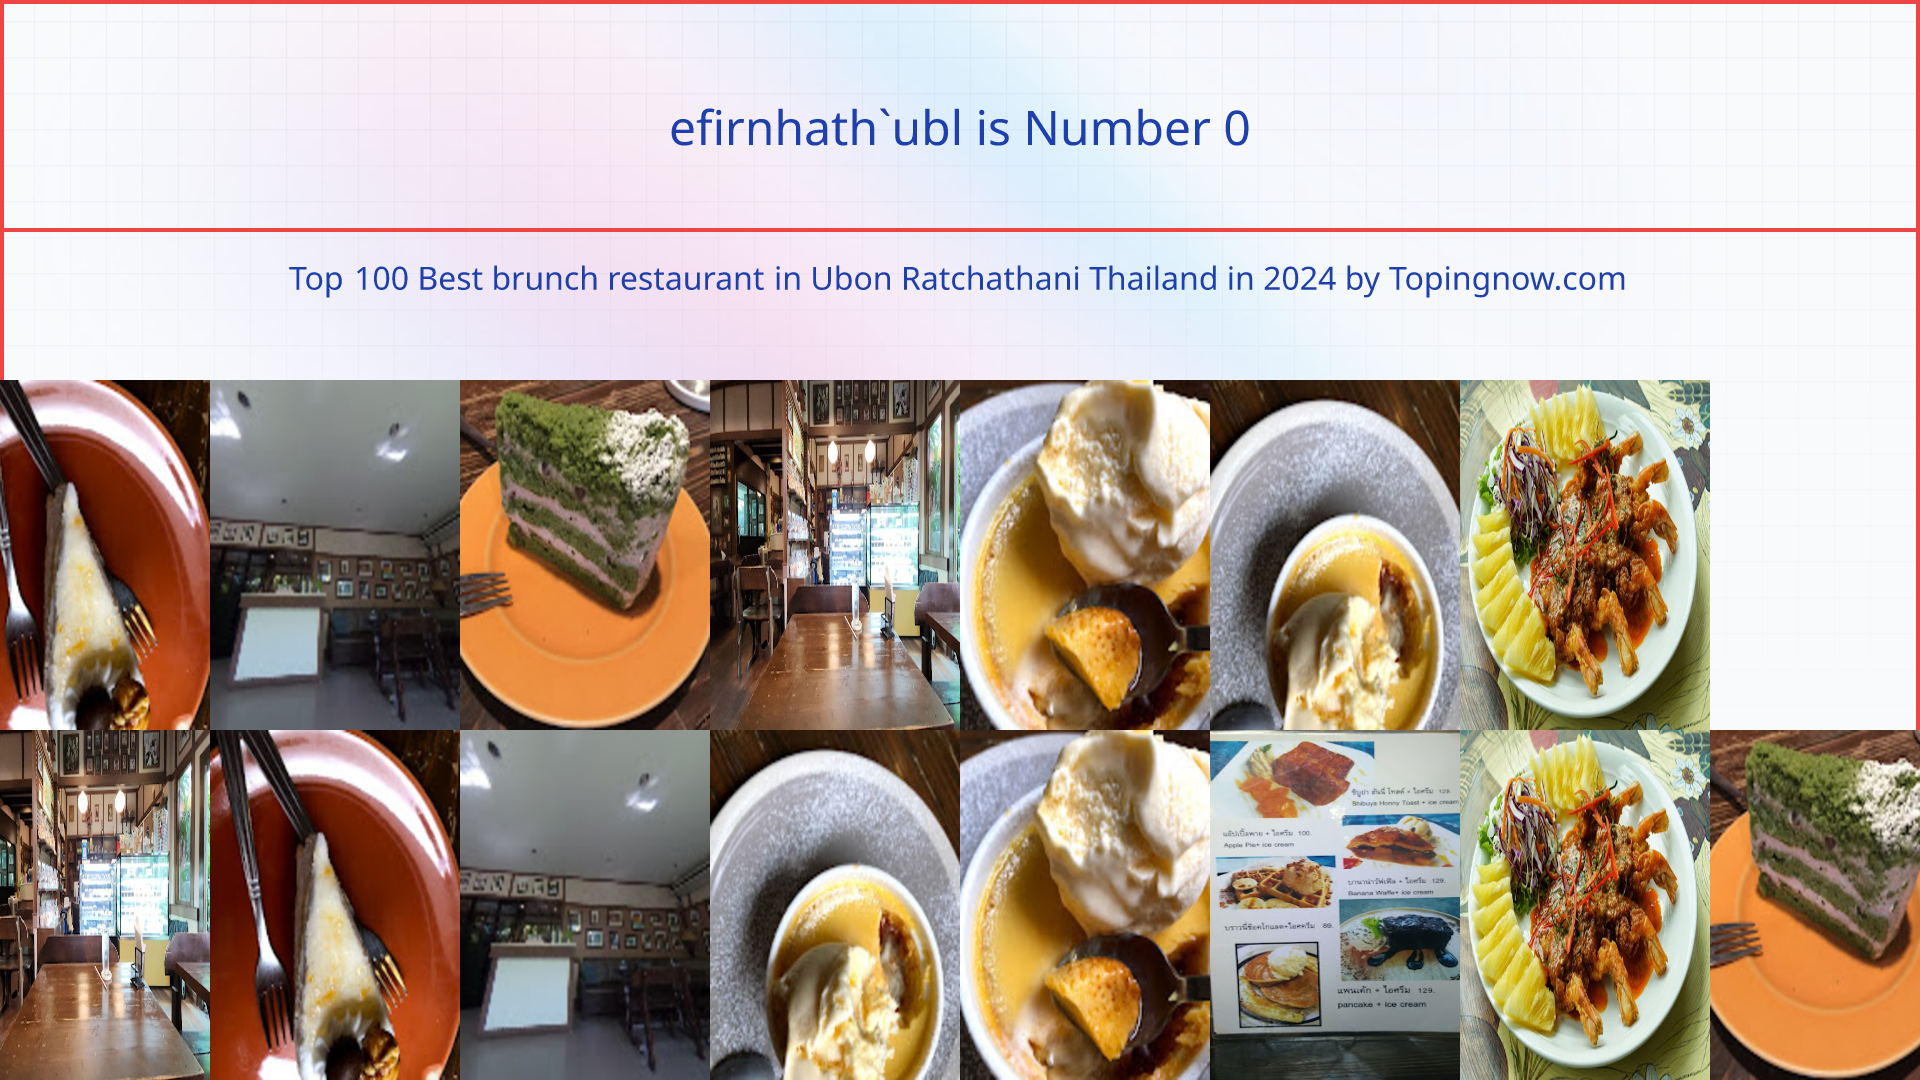 efirnhath`ubl: Top 100 Best brunch restaurant in Ubon Ratchathani Thailand in 2024